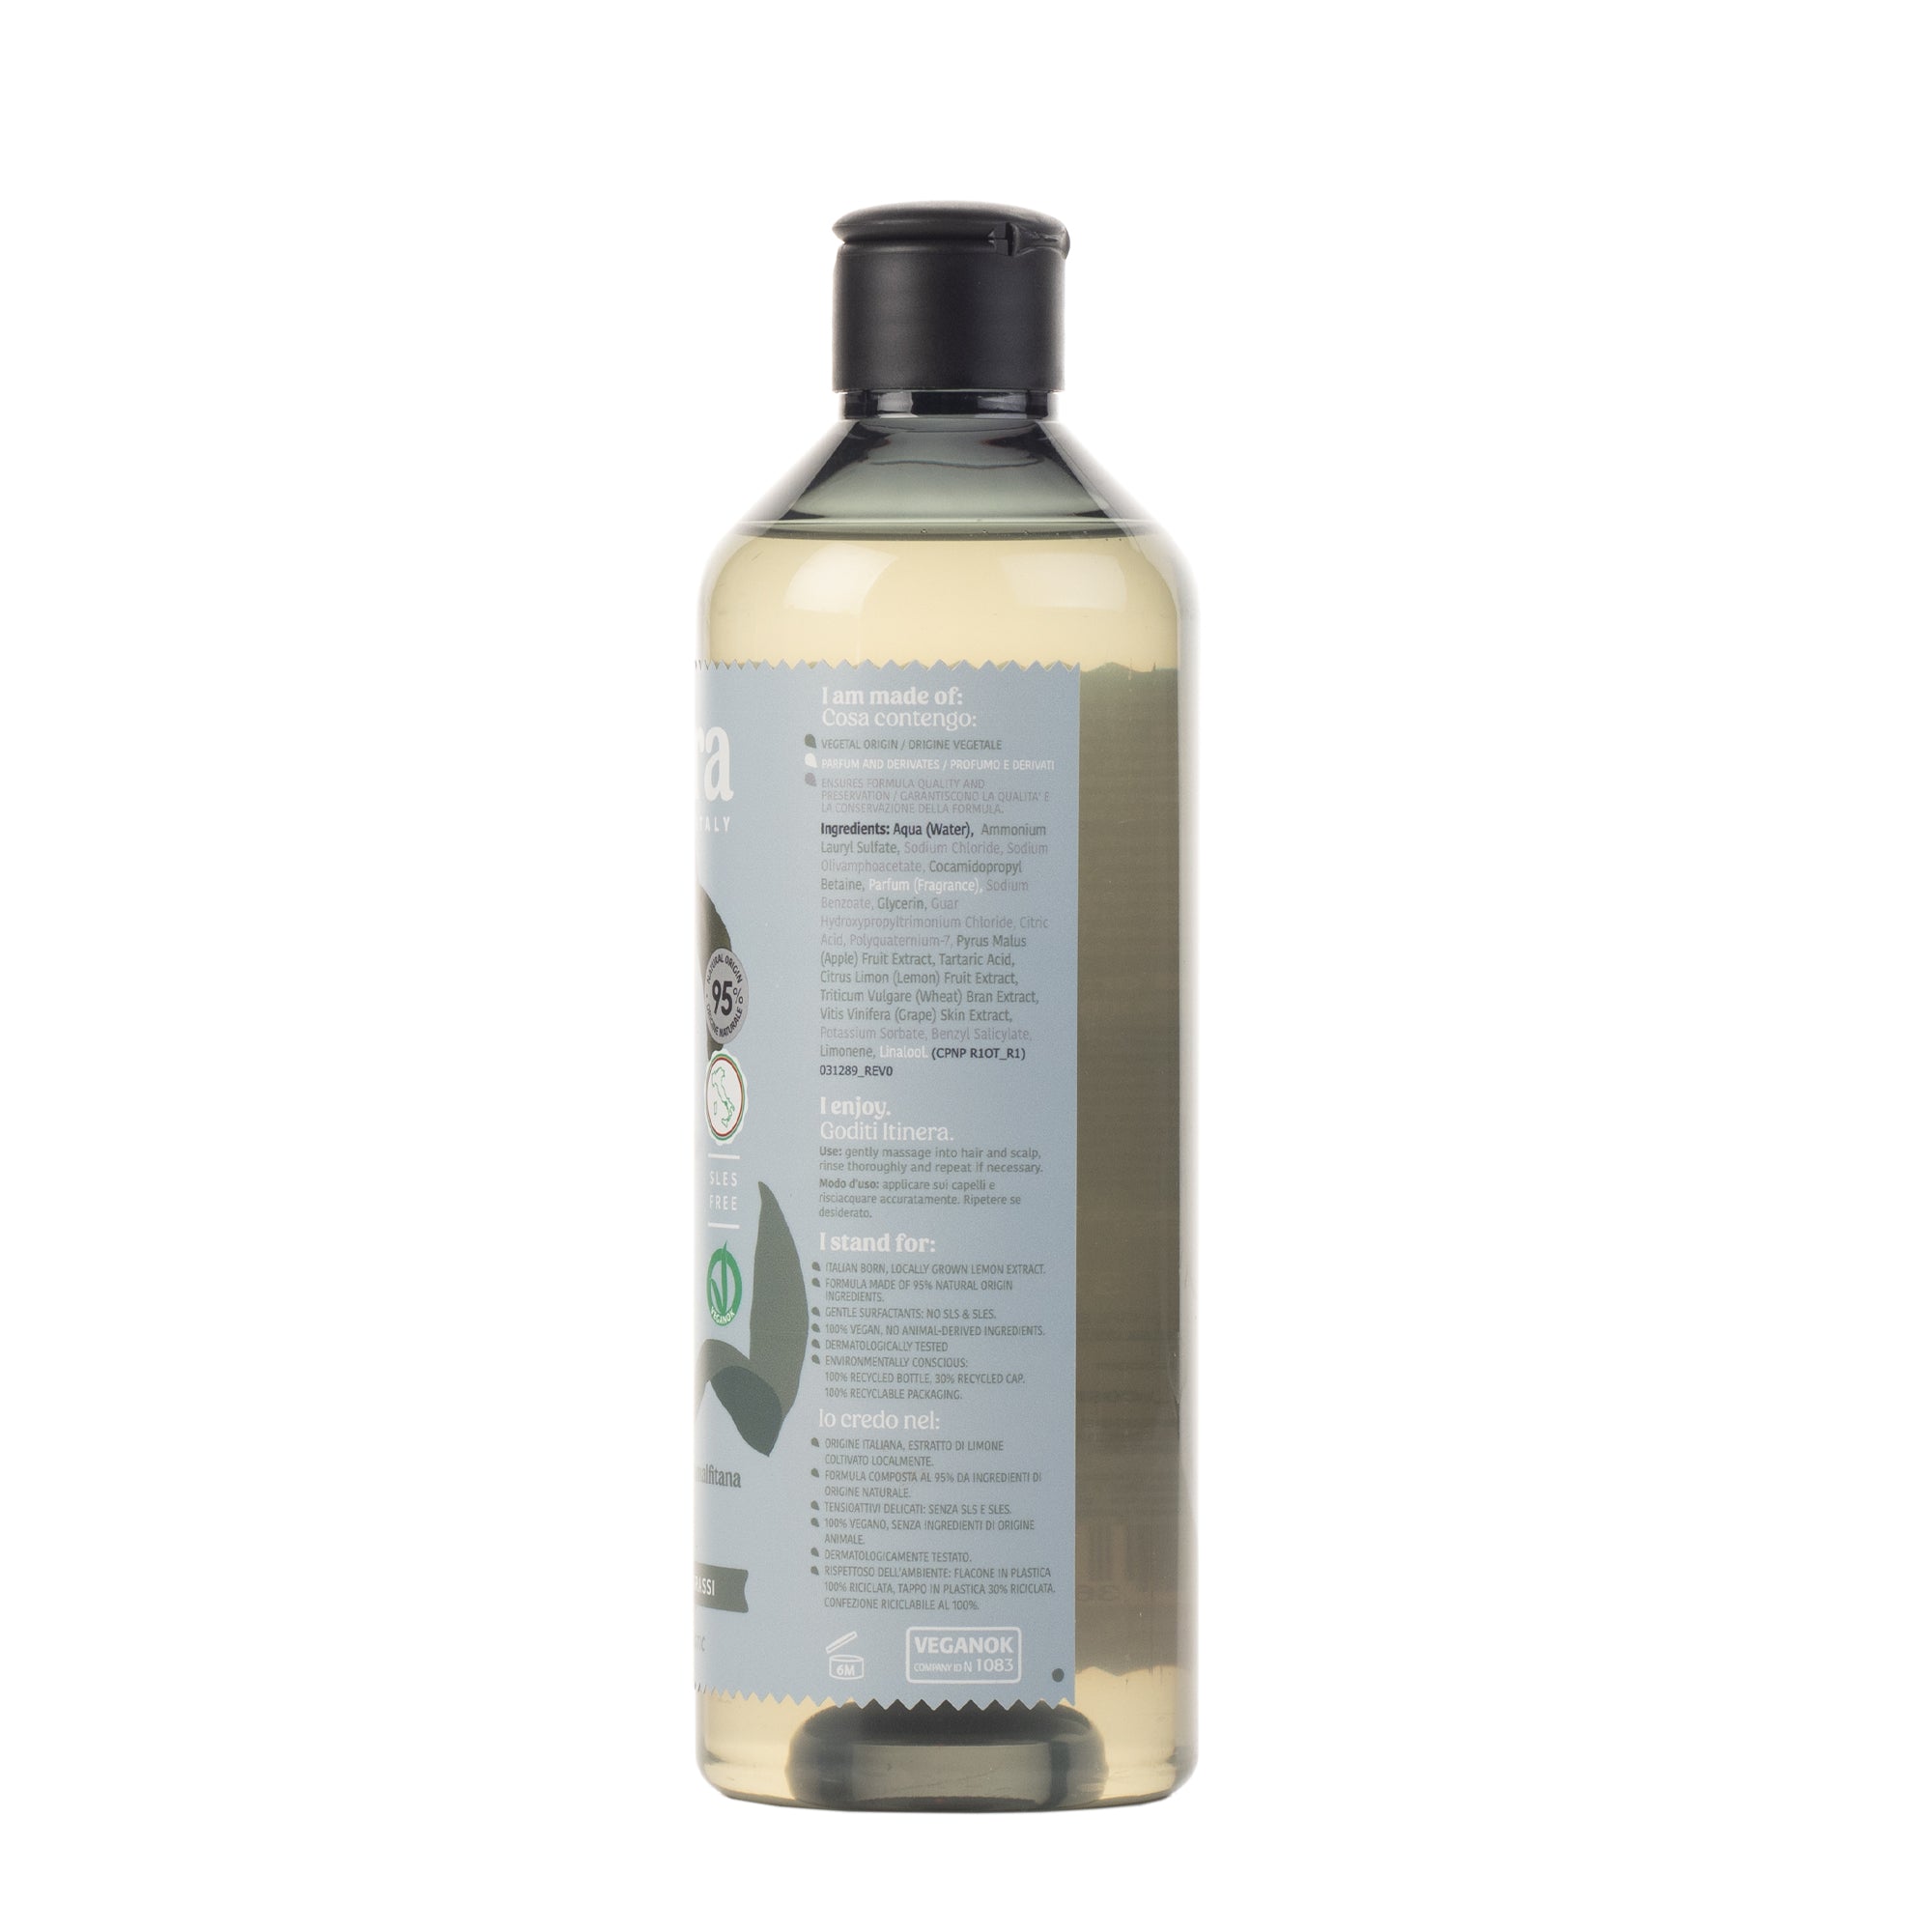 Itinera Daily Sebum Control Shampoo (370 ml)